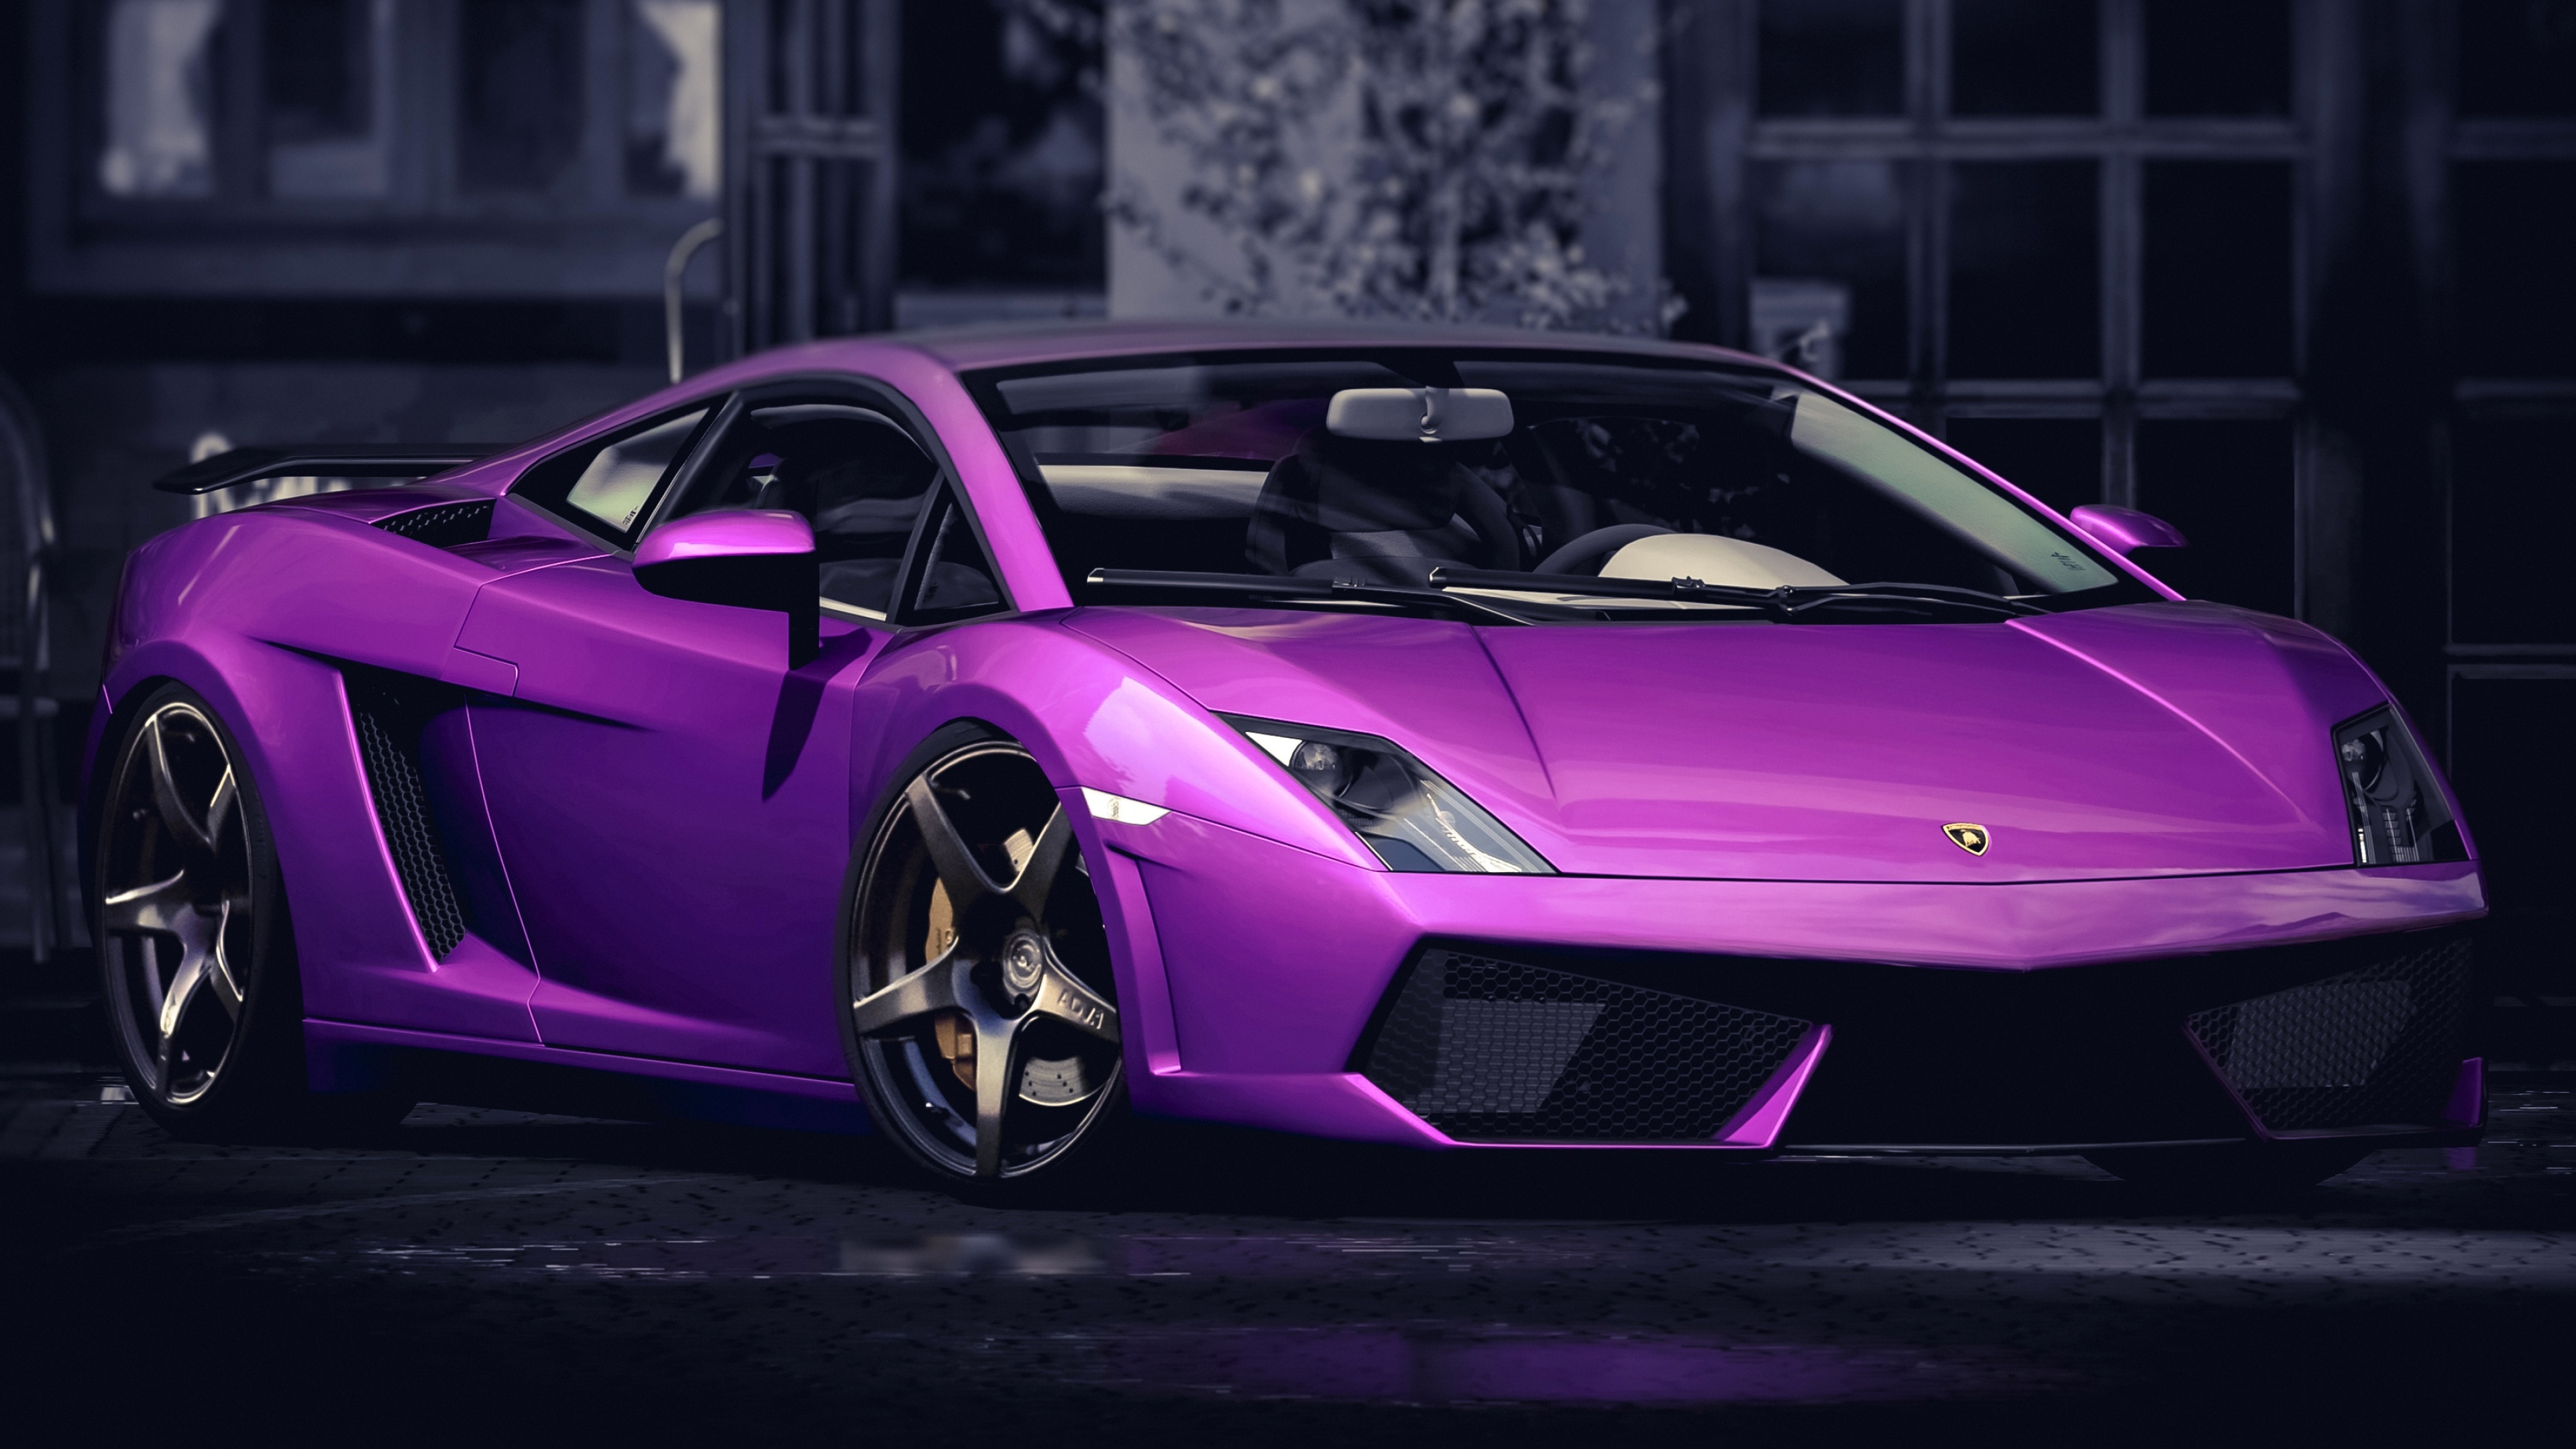 Lamborghini Gallardo, 4K Ultra HD wallpaper, Background image, 3840x2160 4K Desktop